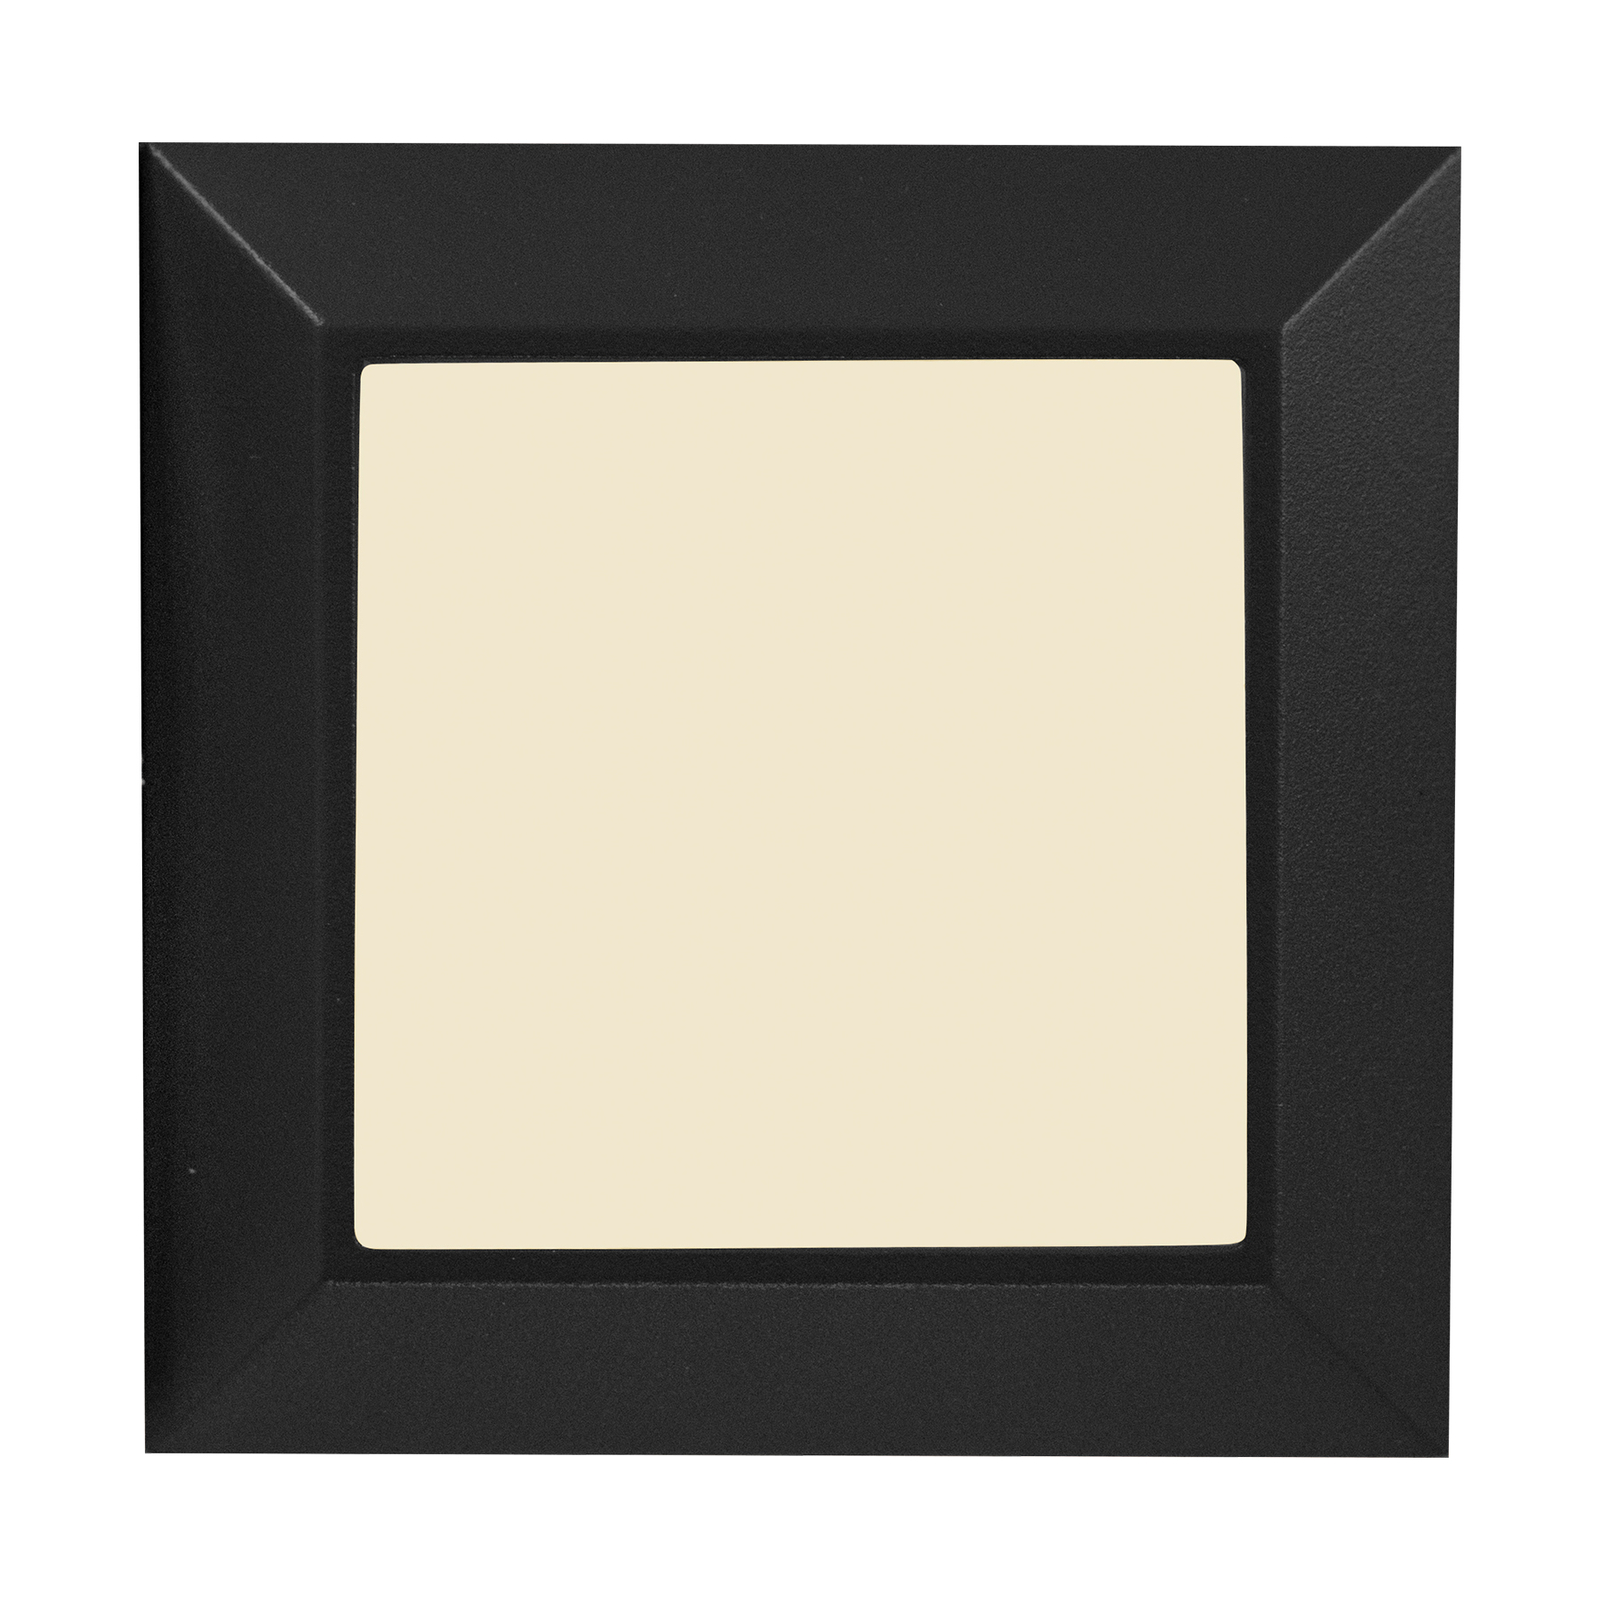 LED-Außenwandlampe Helena, frontal 10 cm schwarz